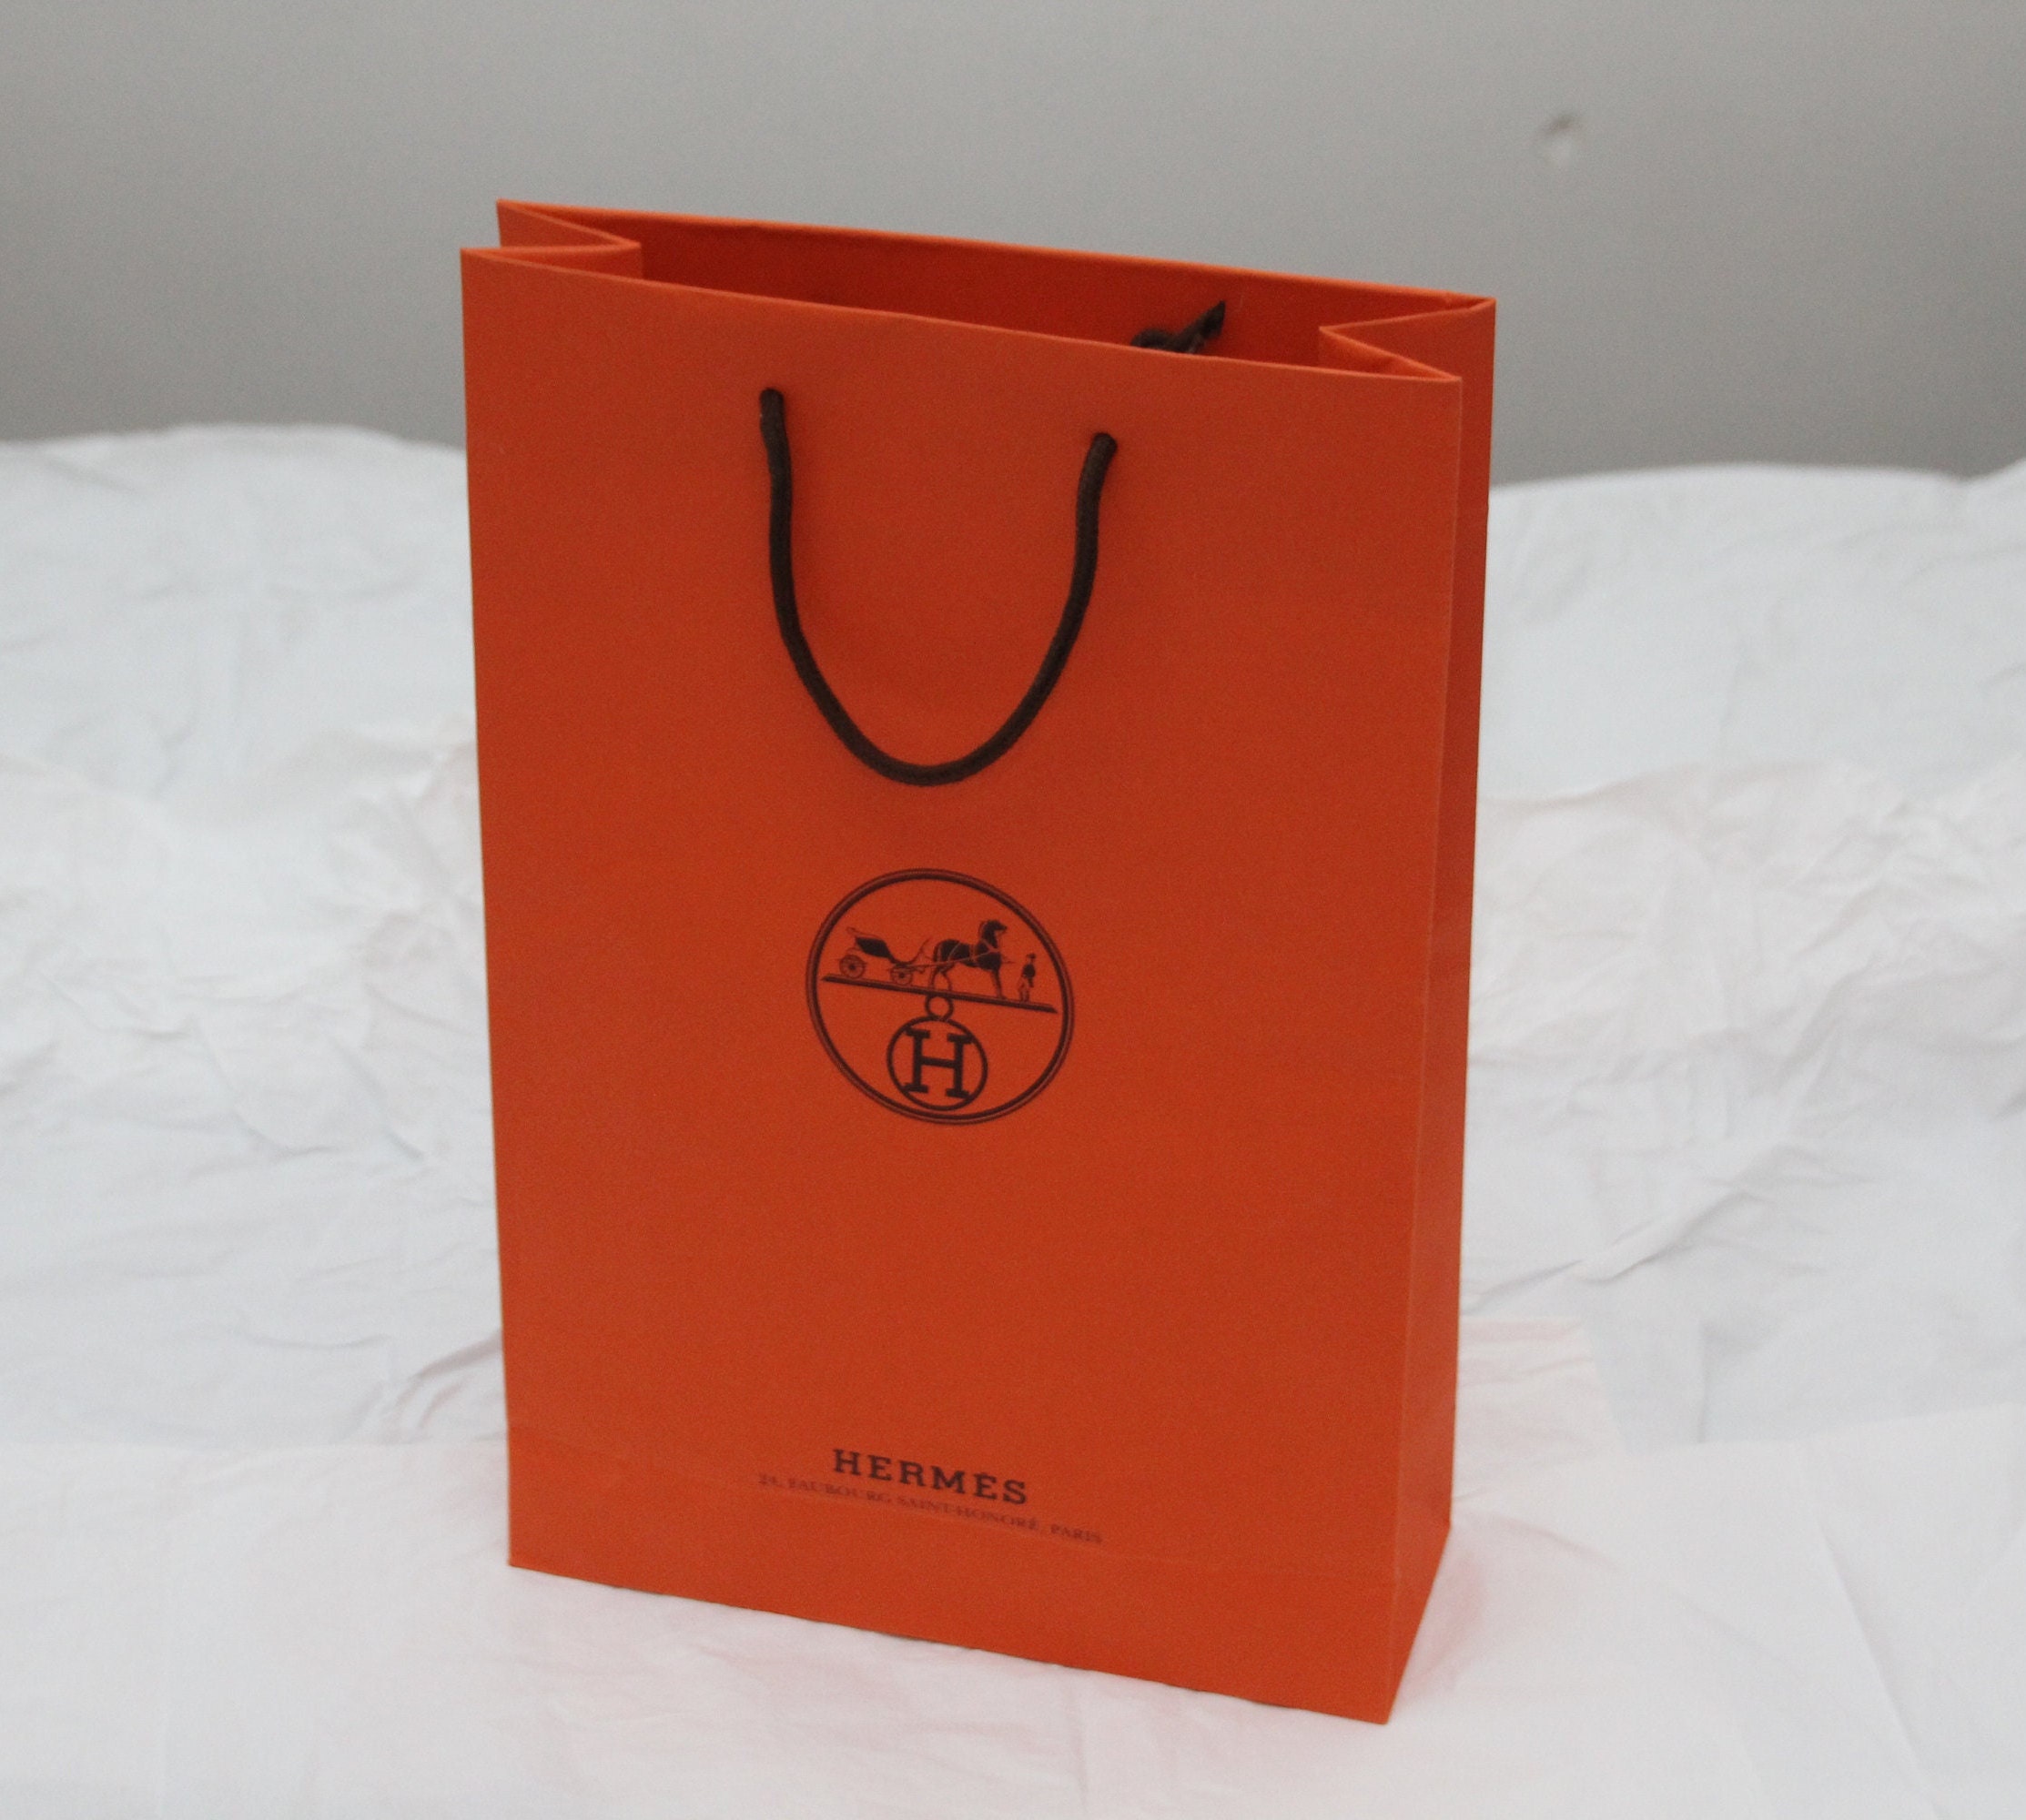 HERMES PARIS Gift Bag (11 x 8 x 3)